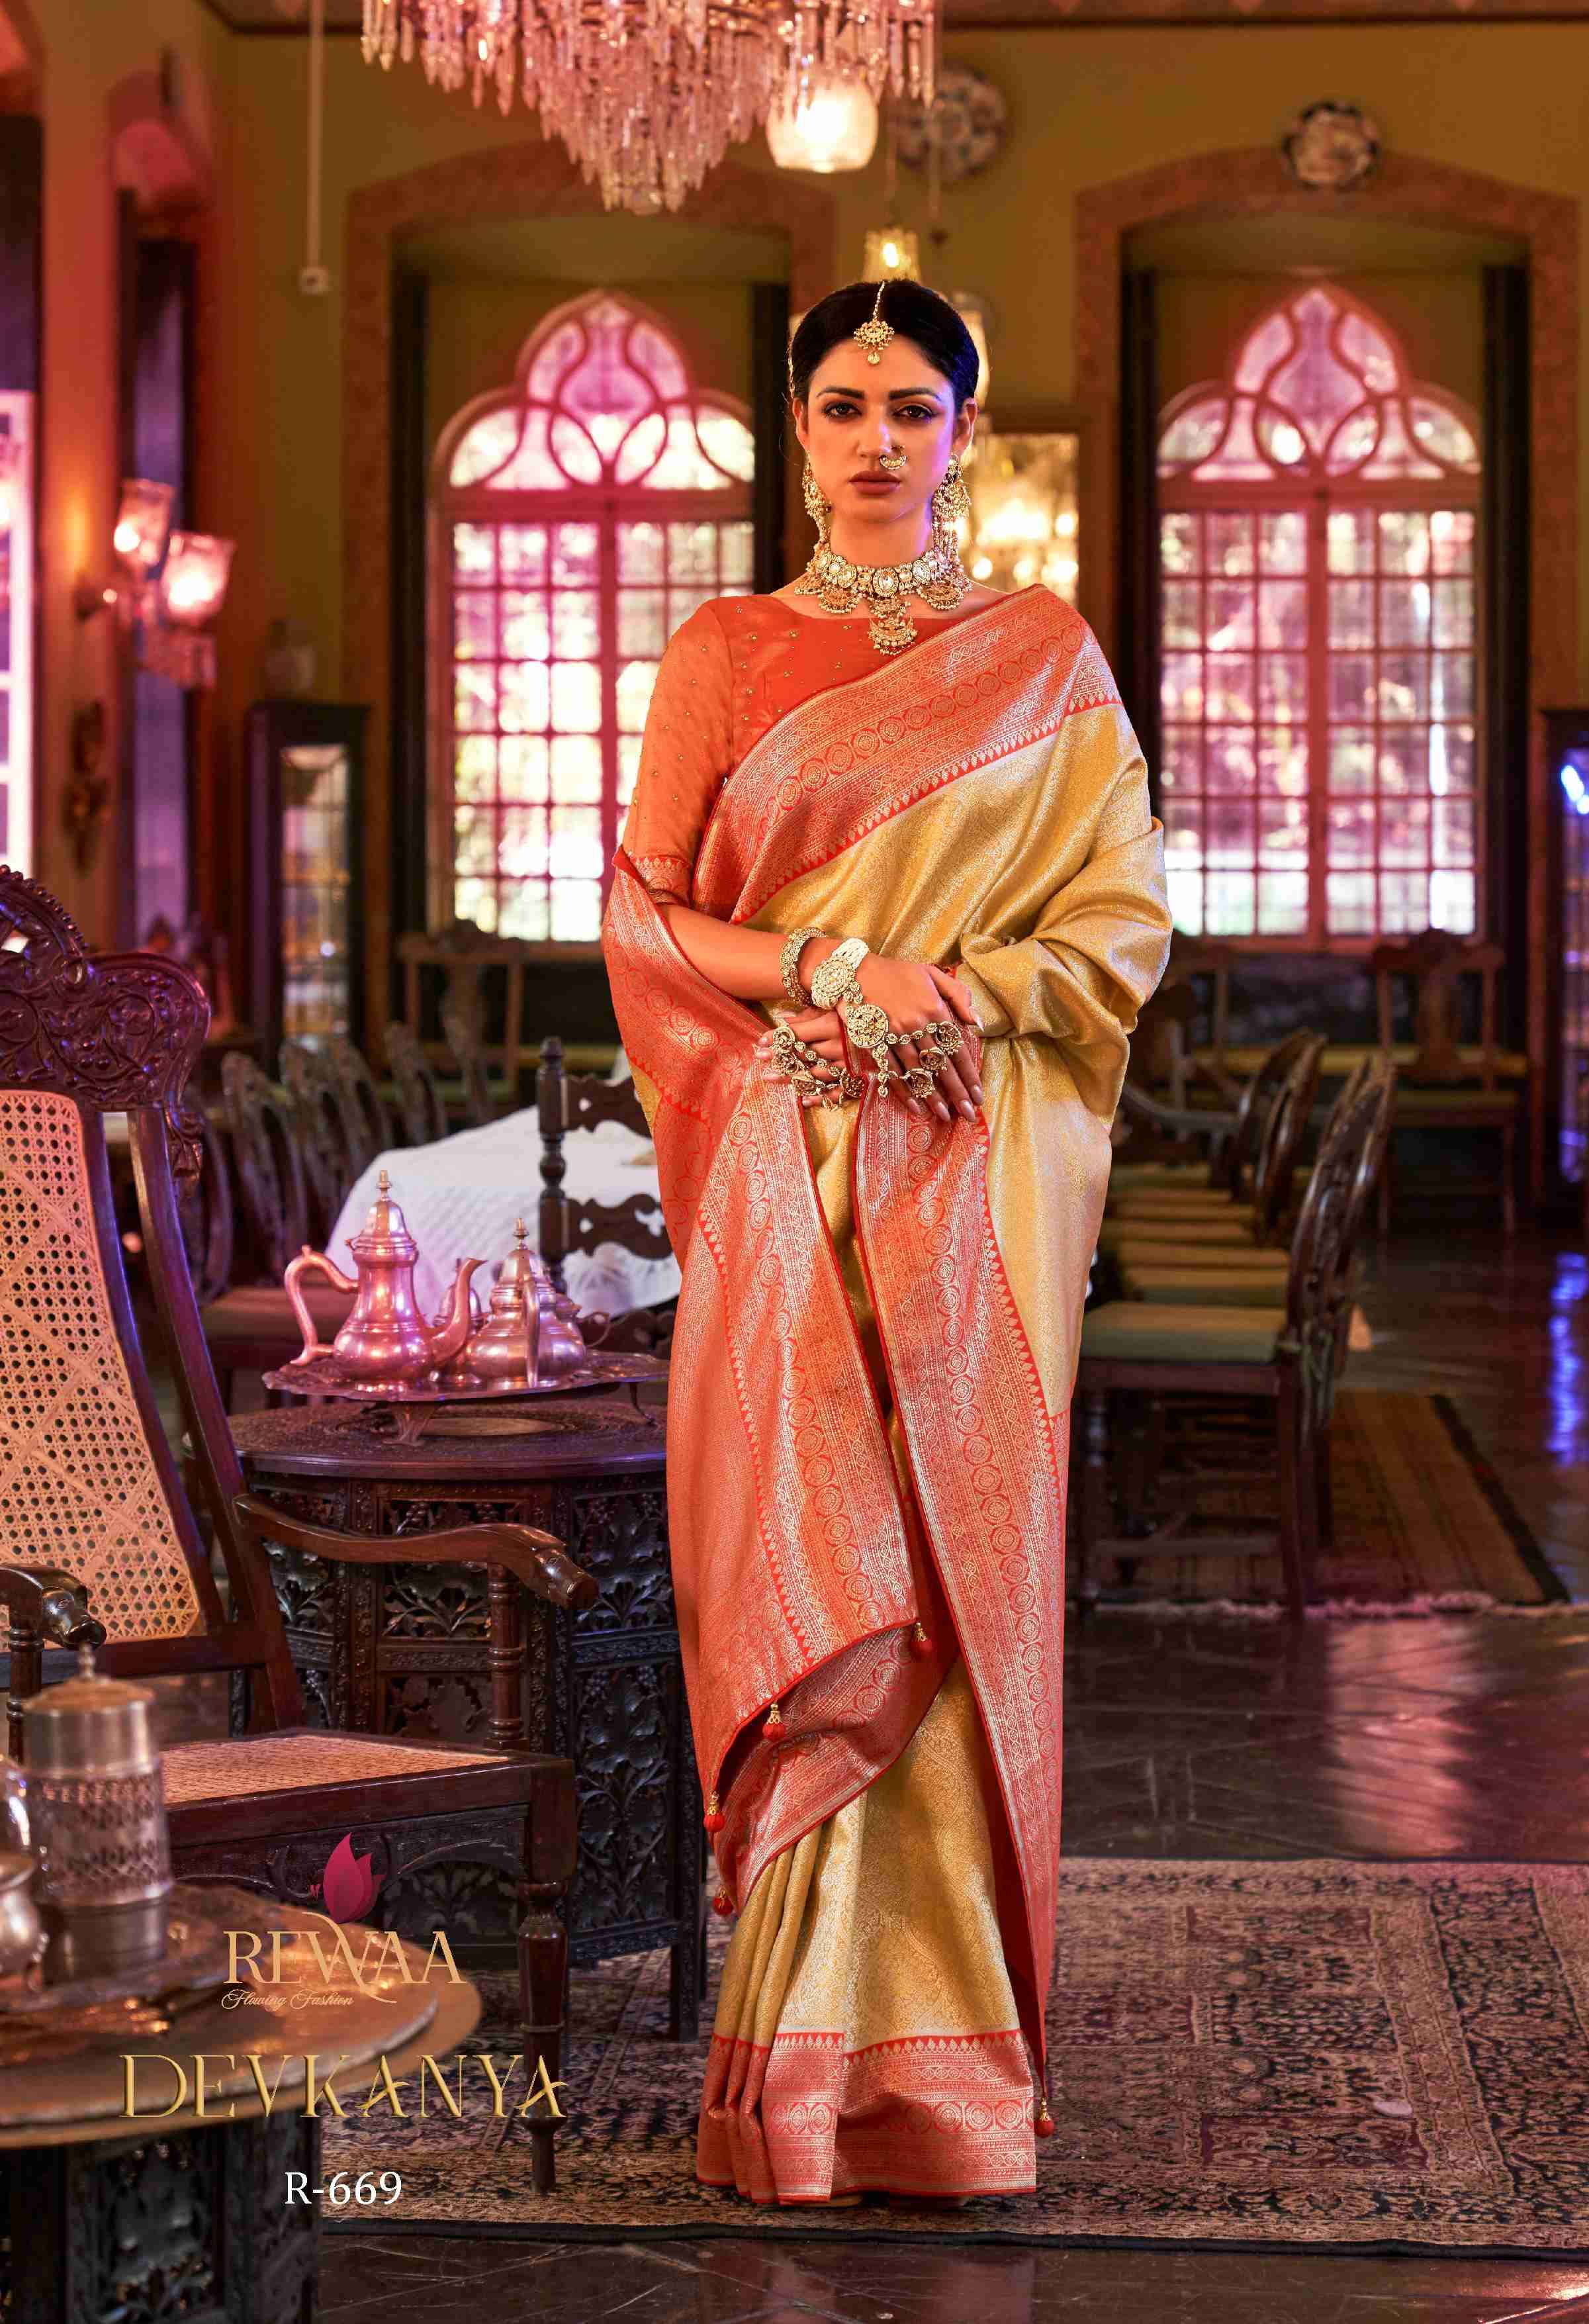 Rewaa Devkanya Designer Kanjivaram Silk Saree Wholesale catalog